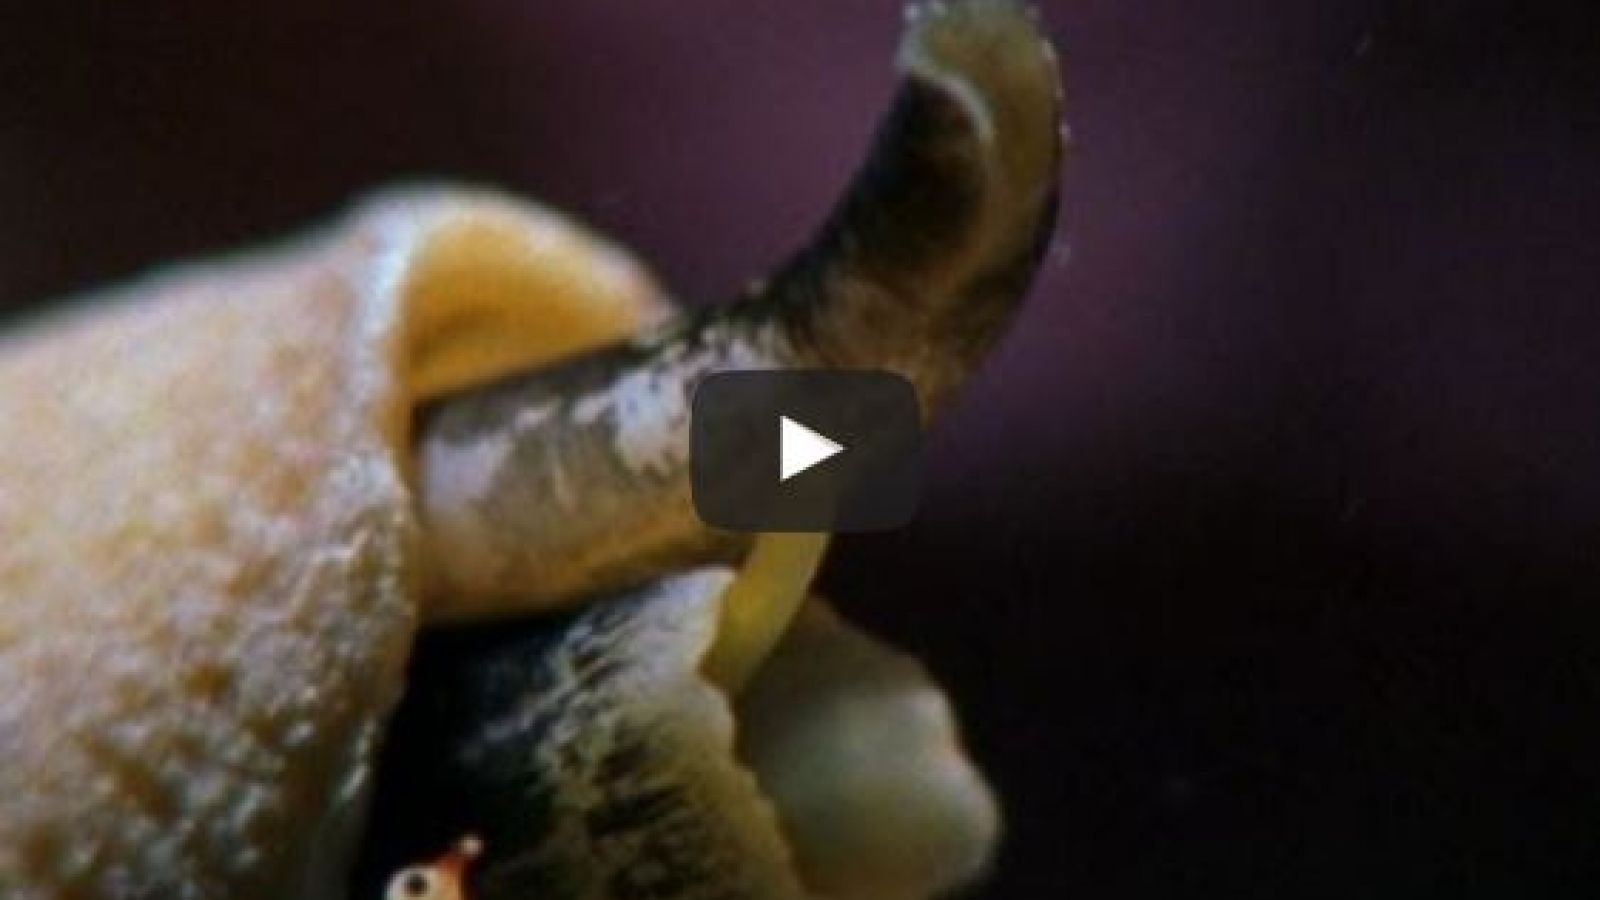 Killer snails eat fish